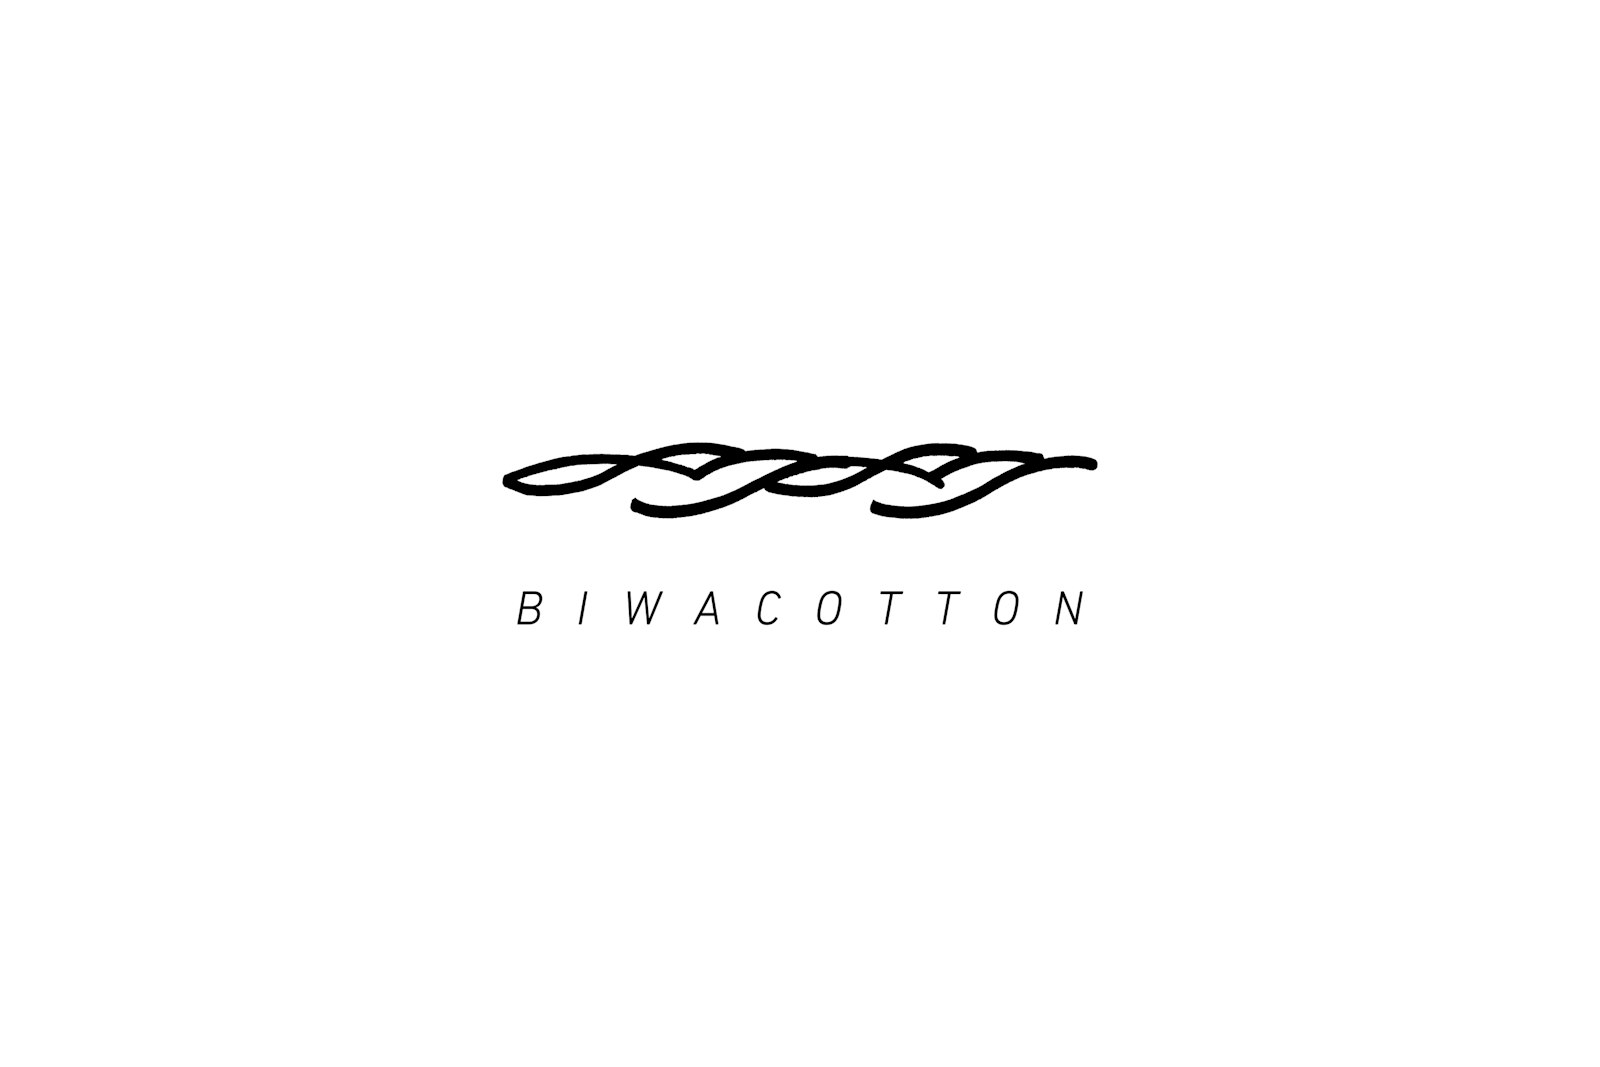 Biwacotton